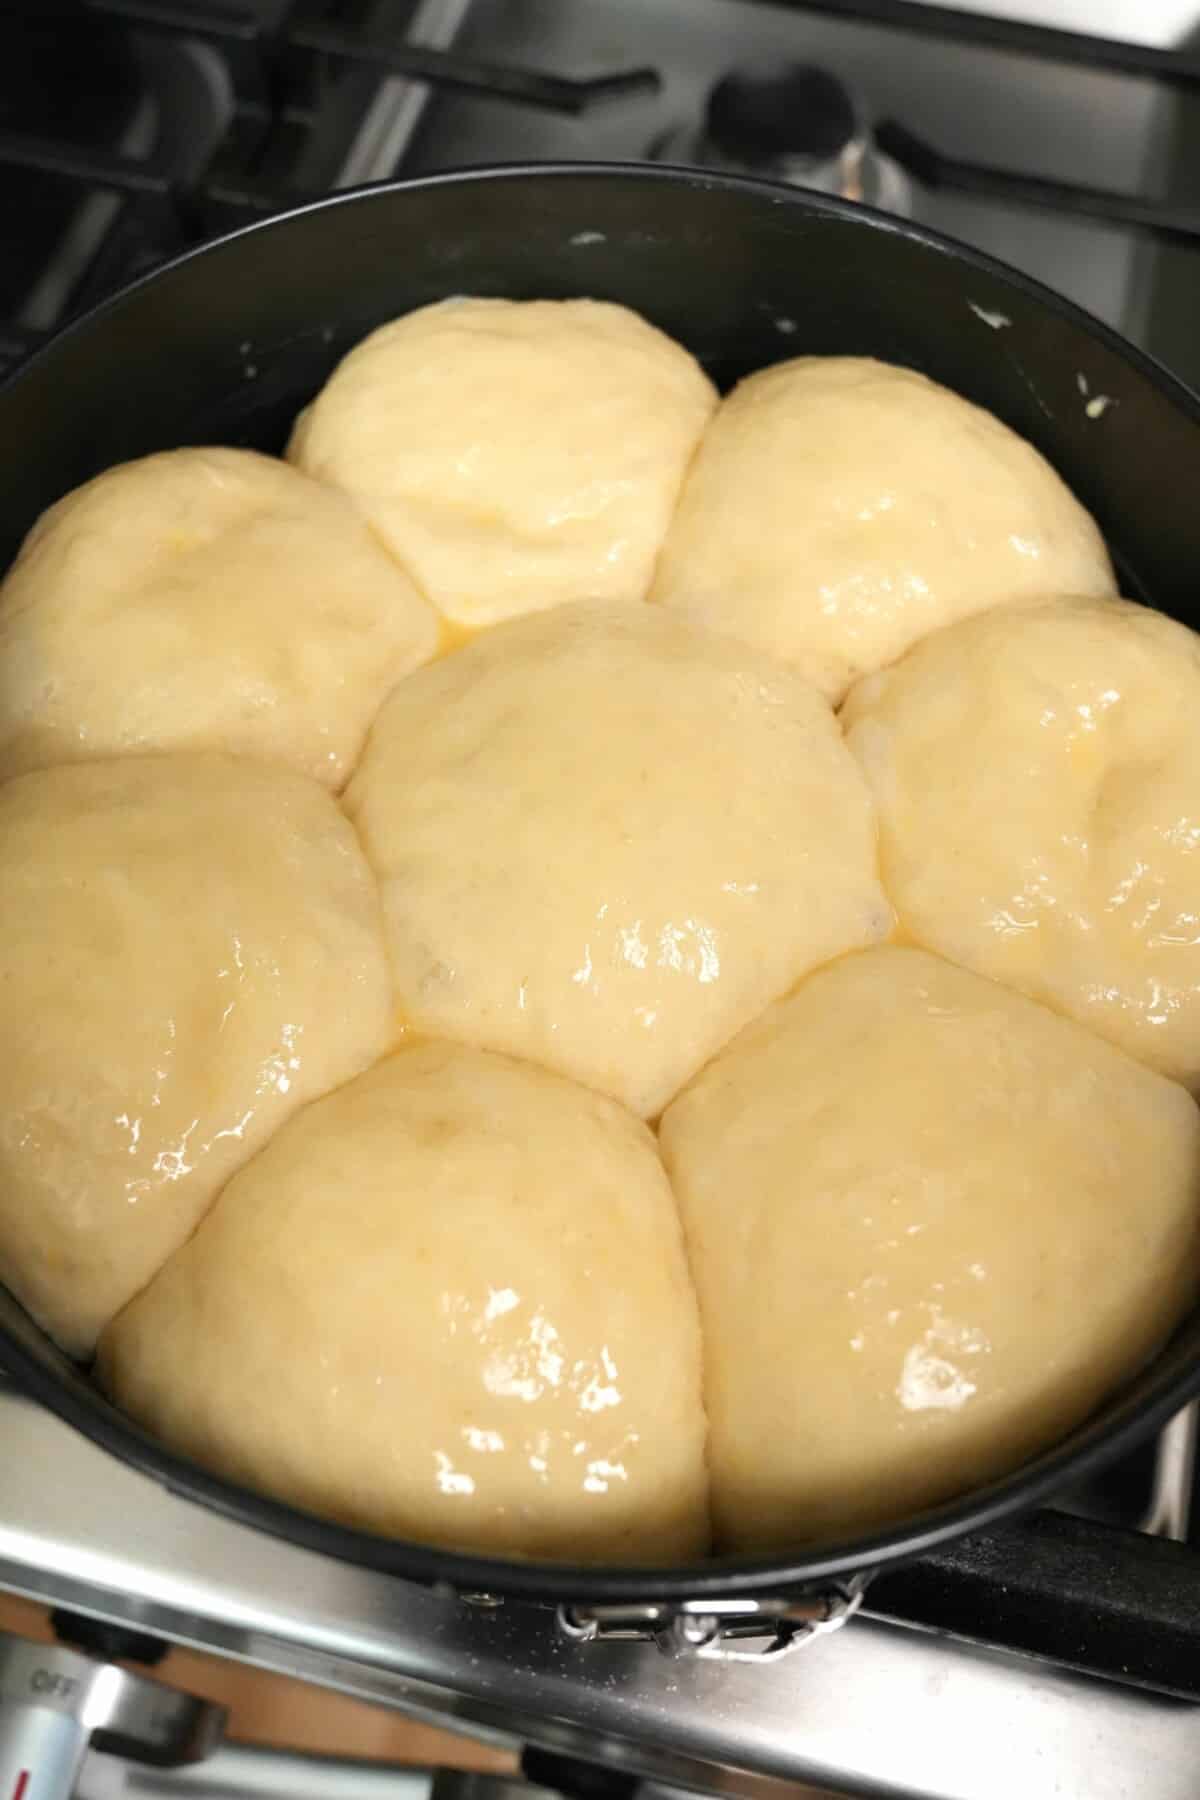 Milk Bread rolls proofed in a baking tin.